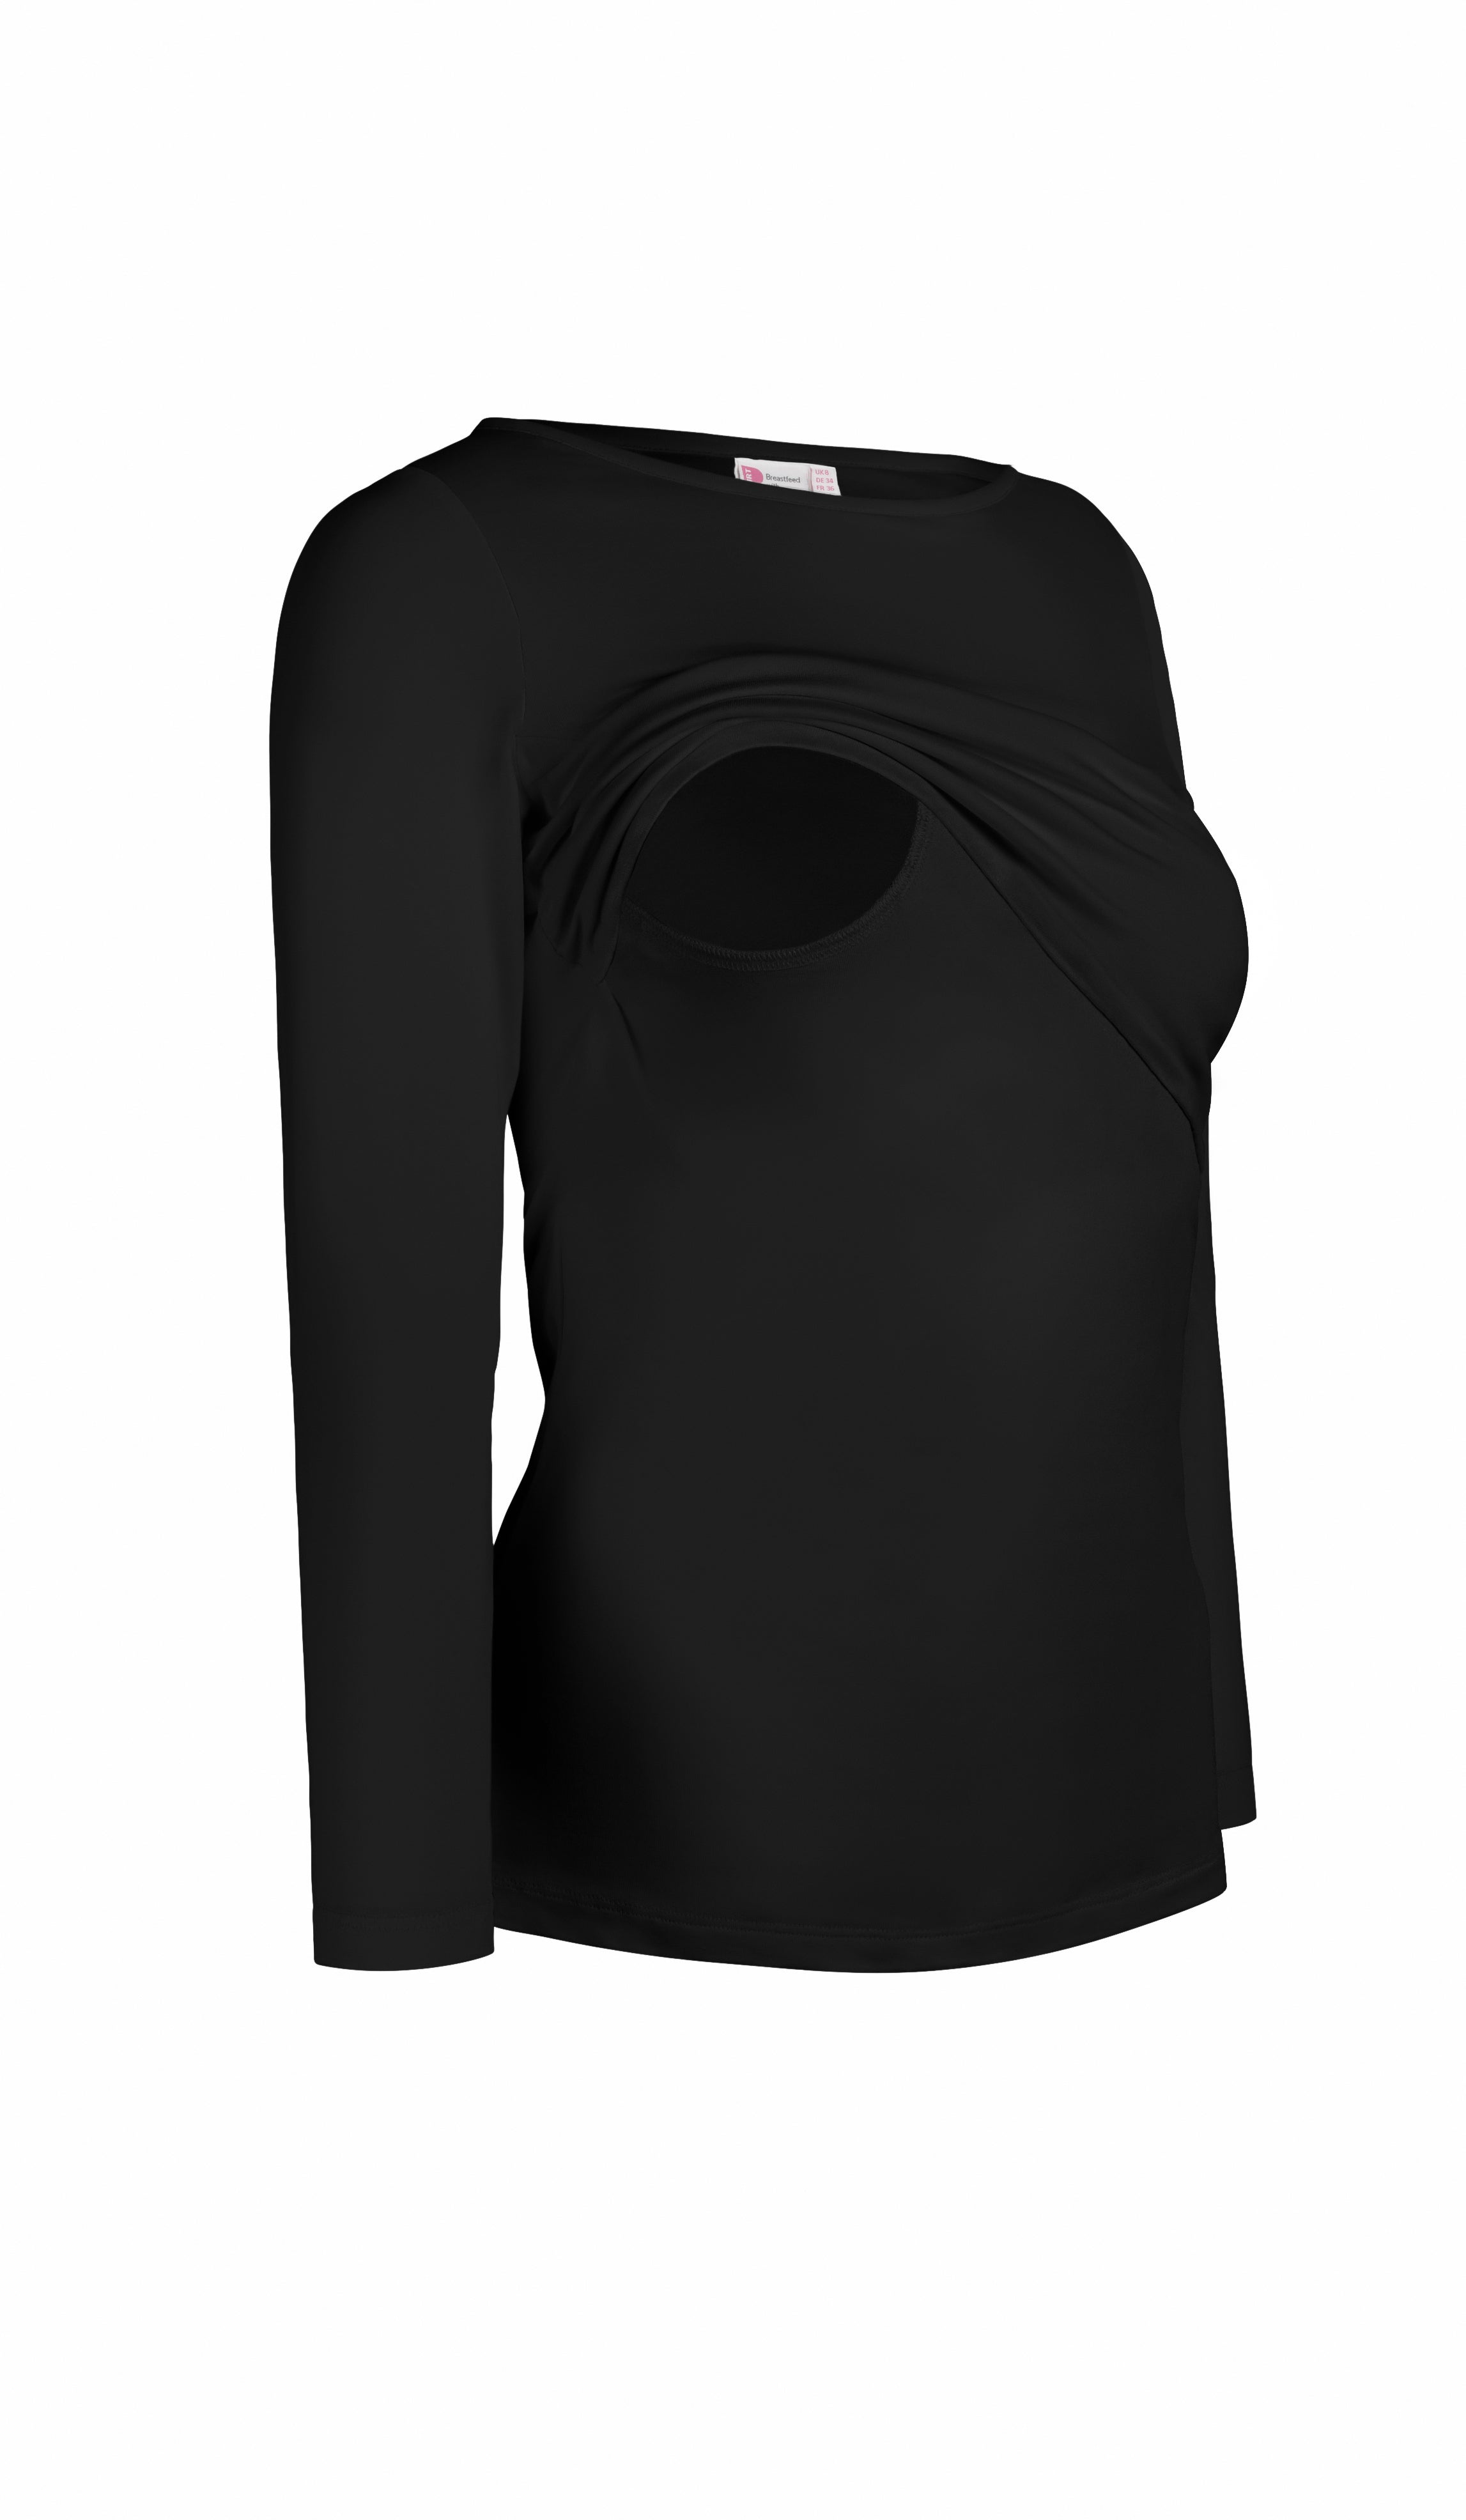 Bshirt Nursing long sleeve t-shirt in Black